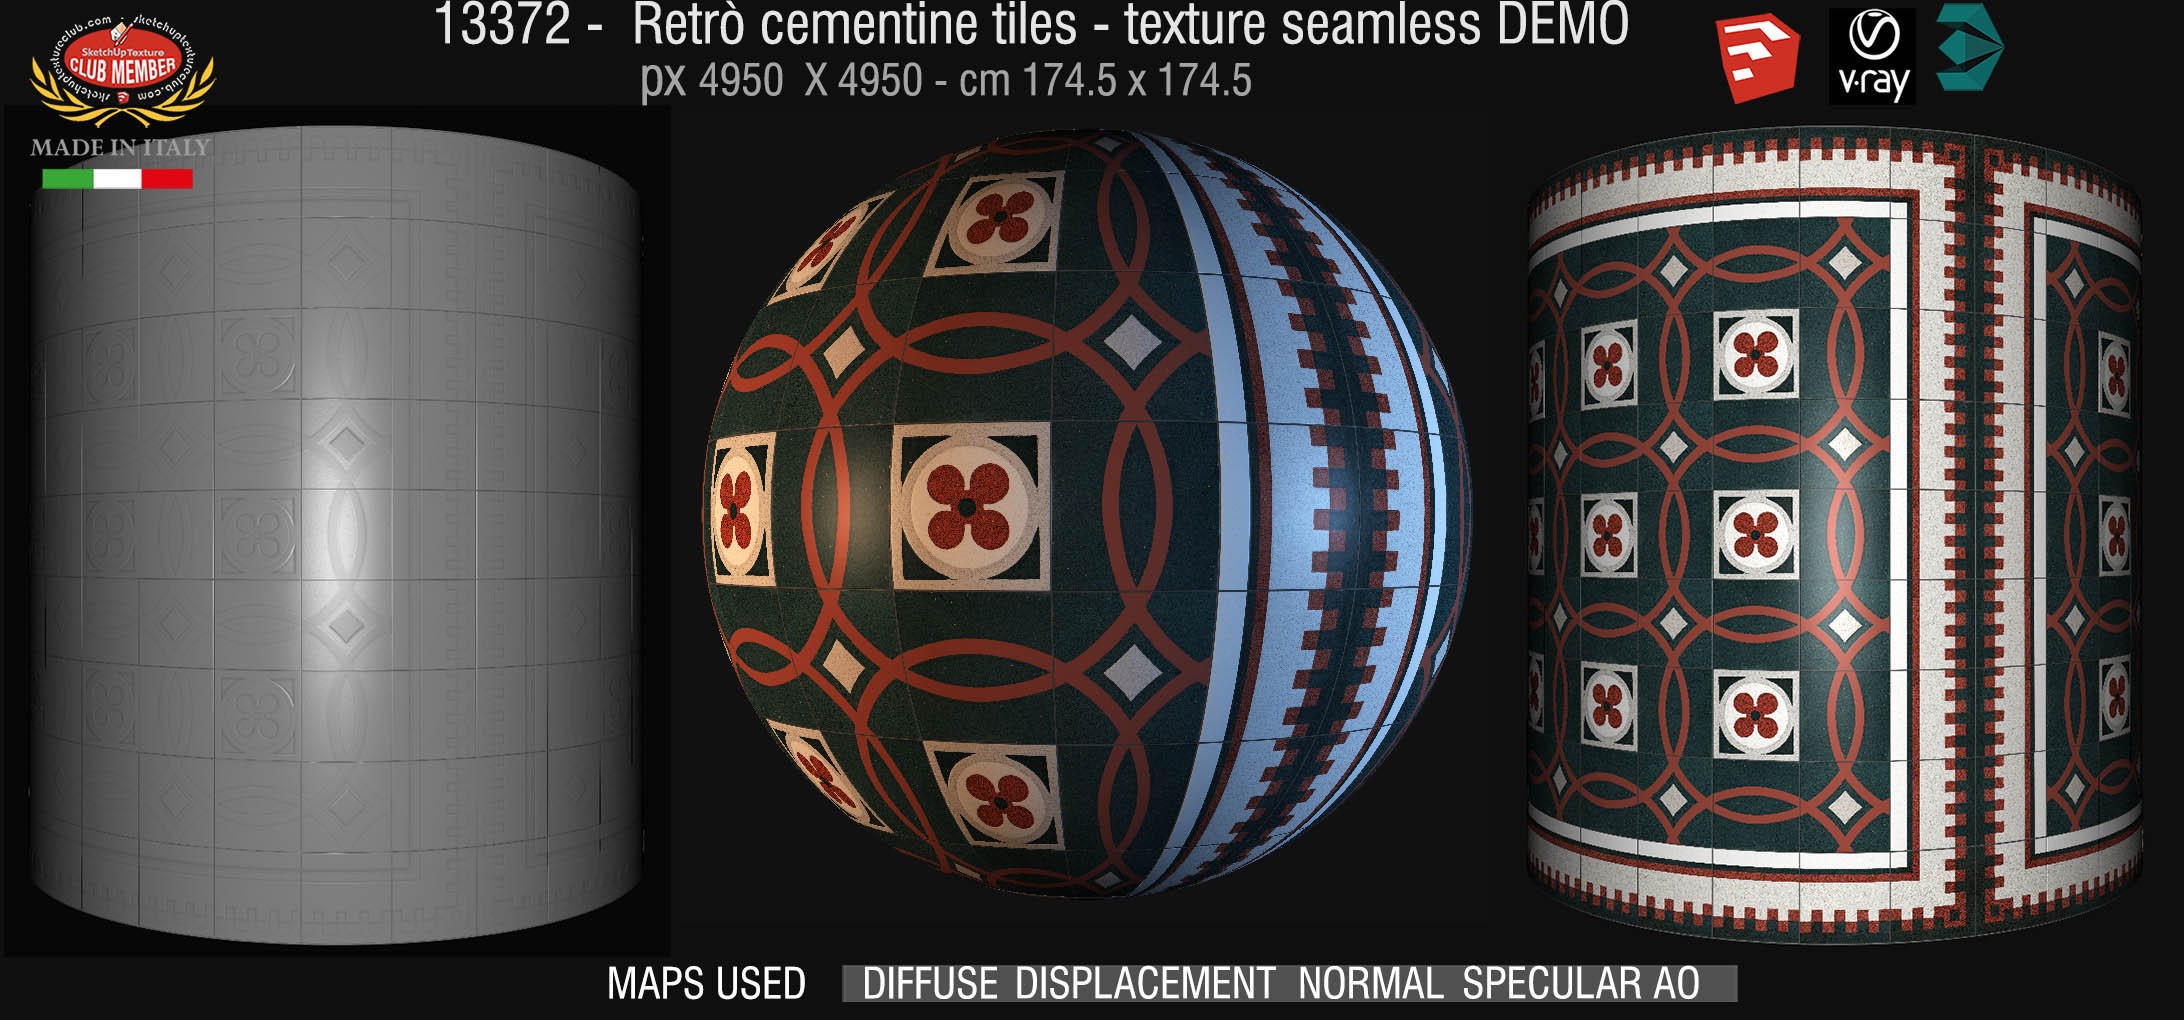 13372 retrò cementine tiles - texture seamless + maps DEMO